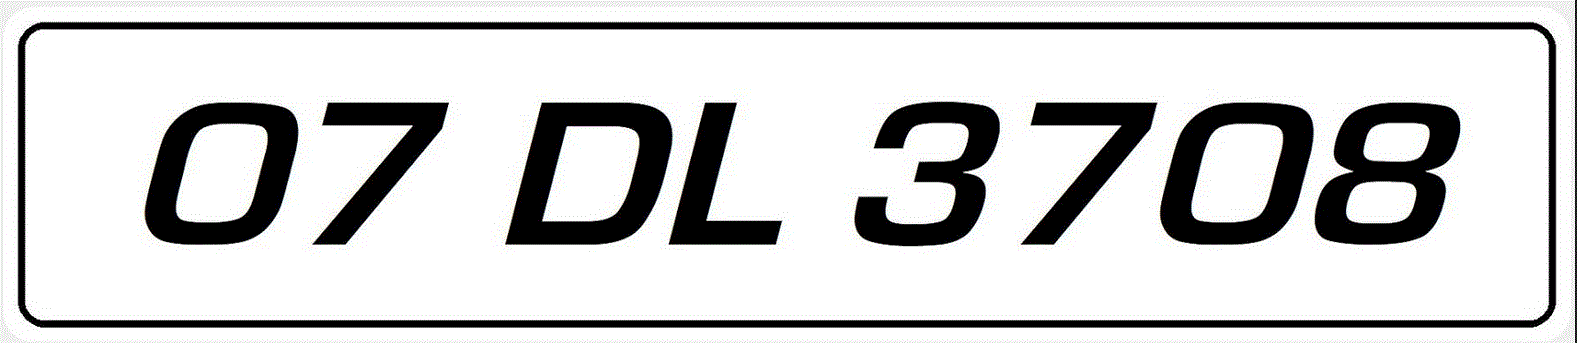 Eurostile Font on white acrylic plate (Single)